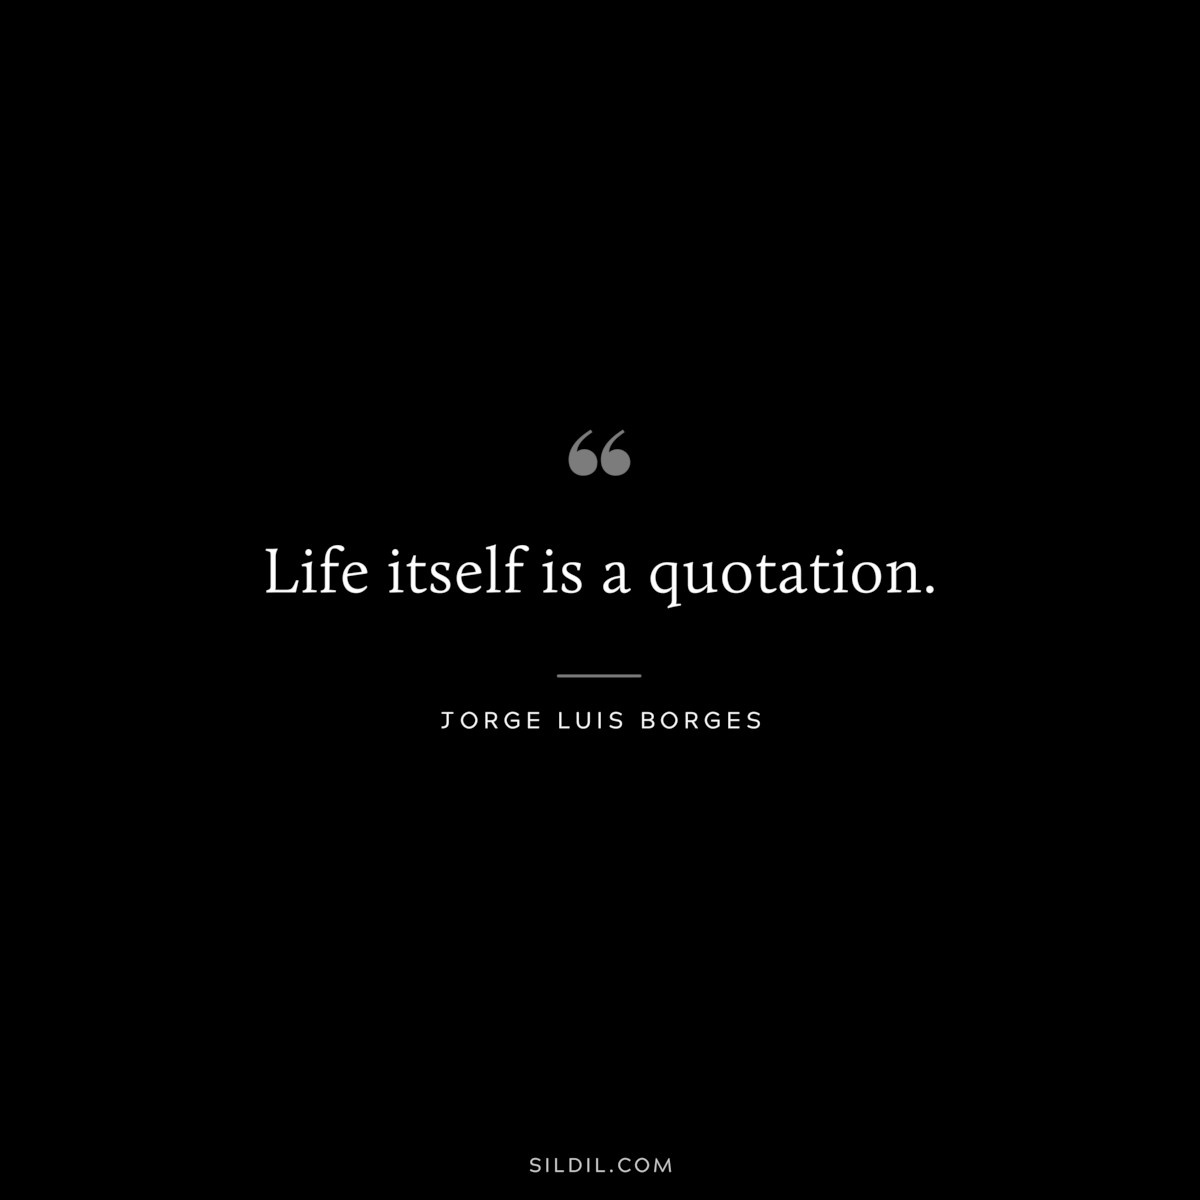 Life itself is a quotation. ― Jorge Luis Borges